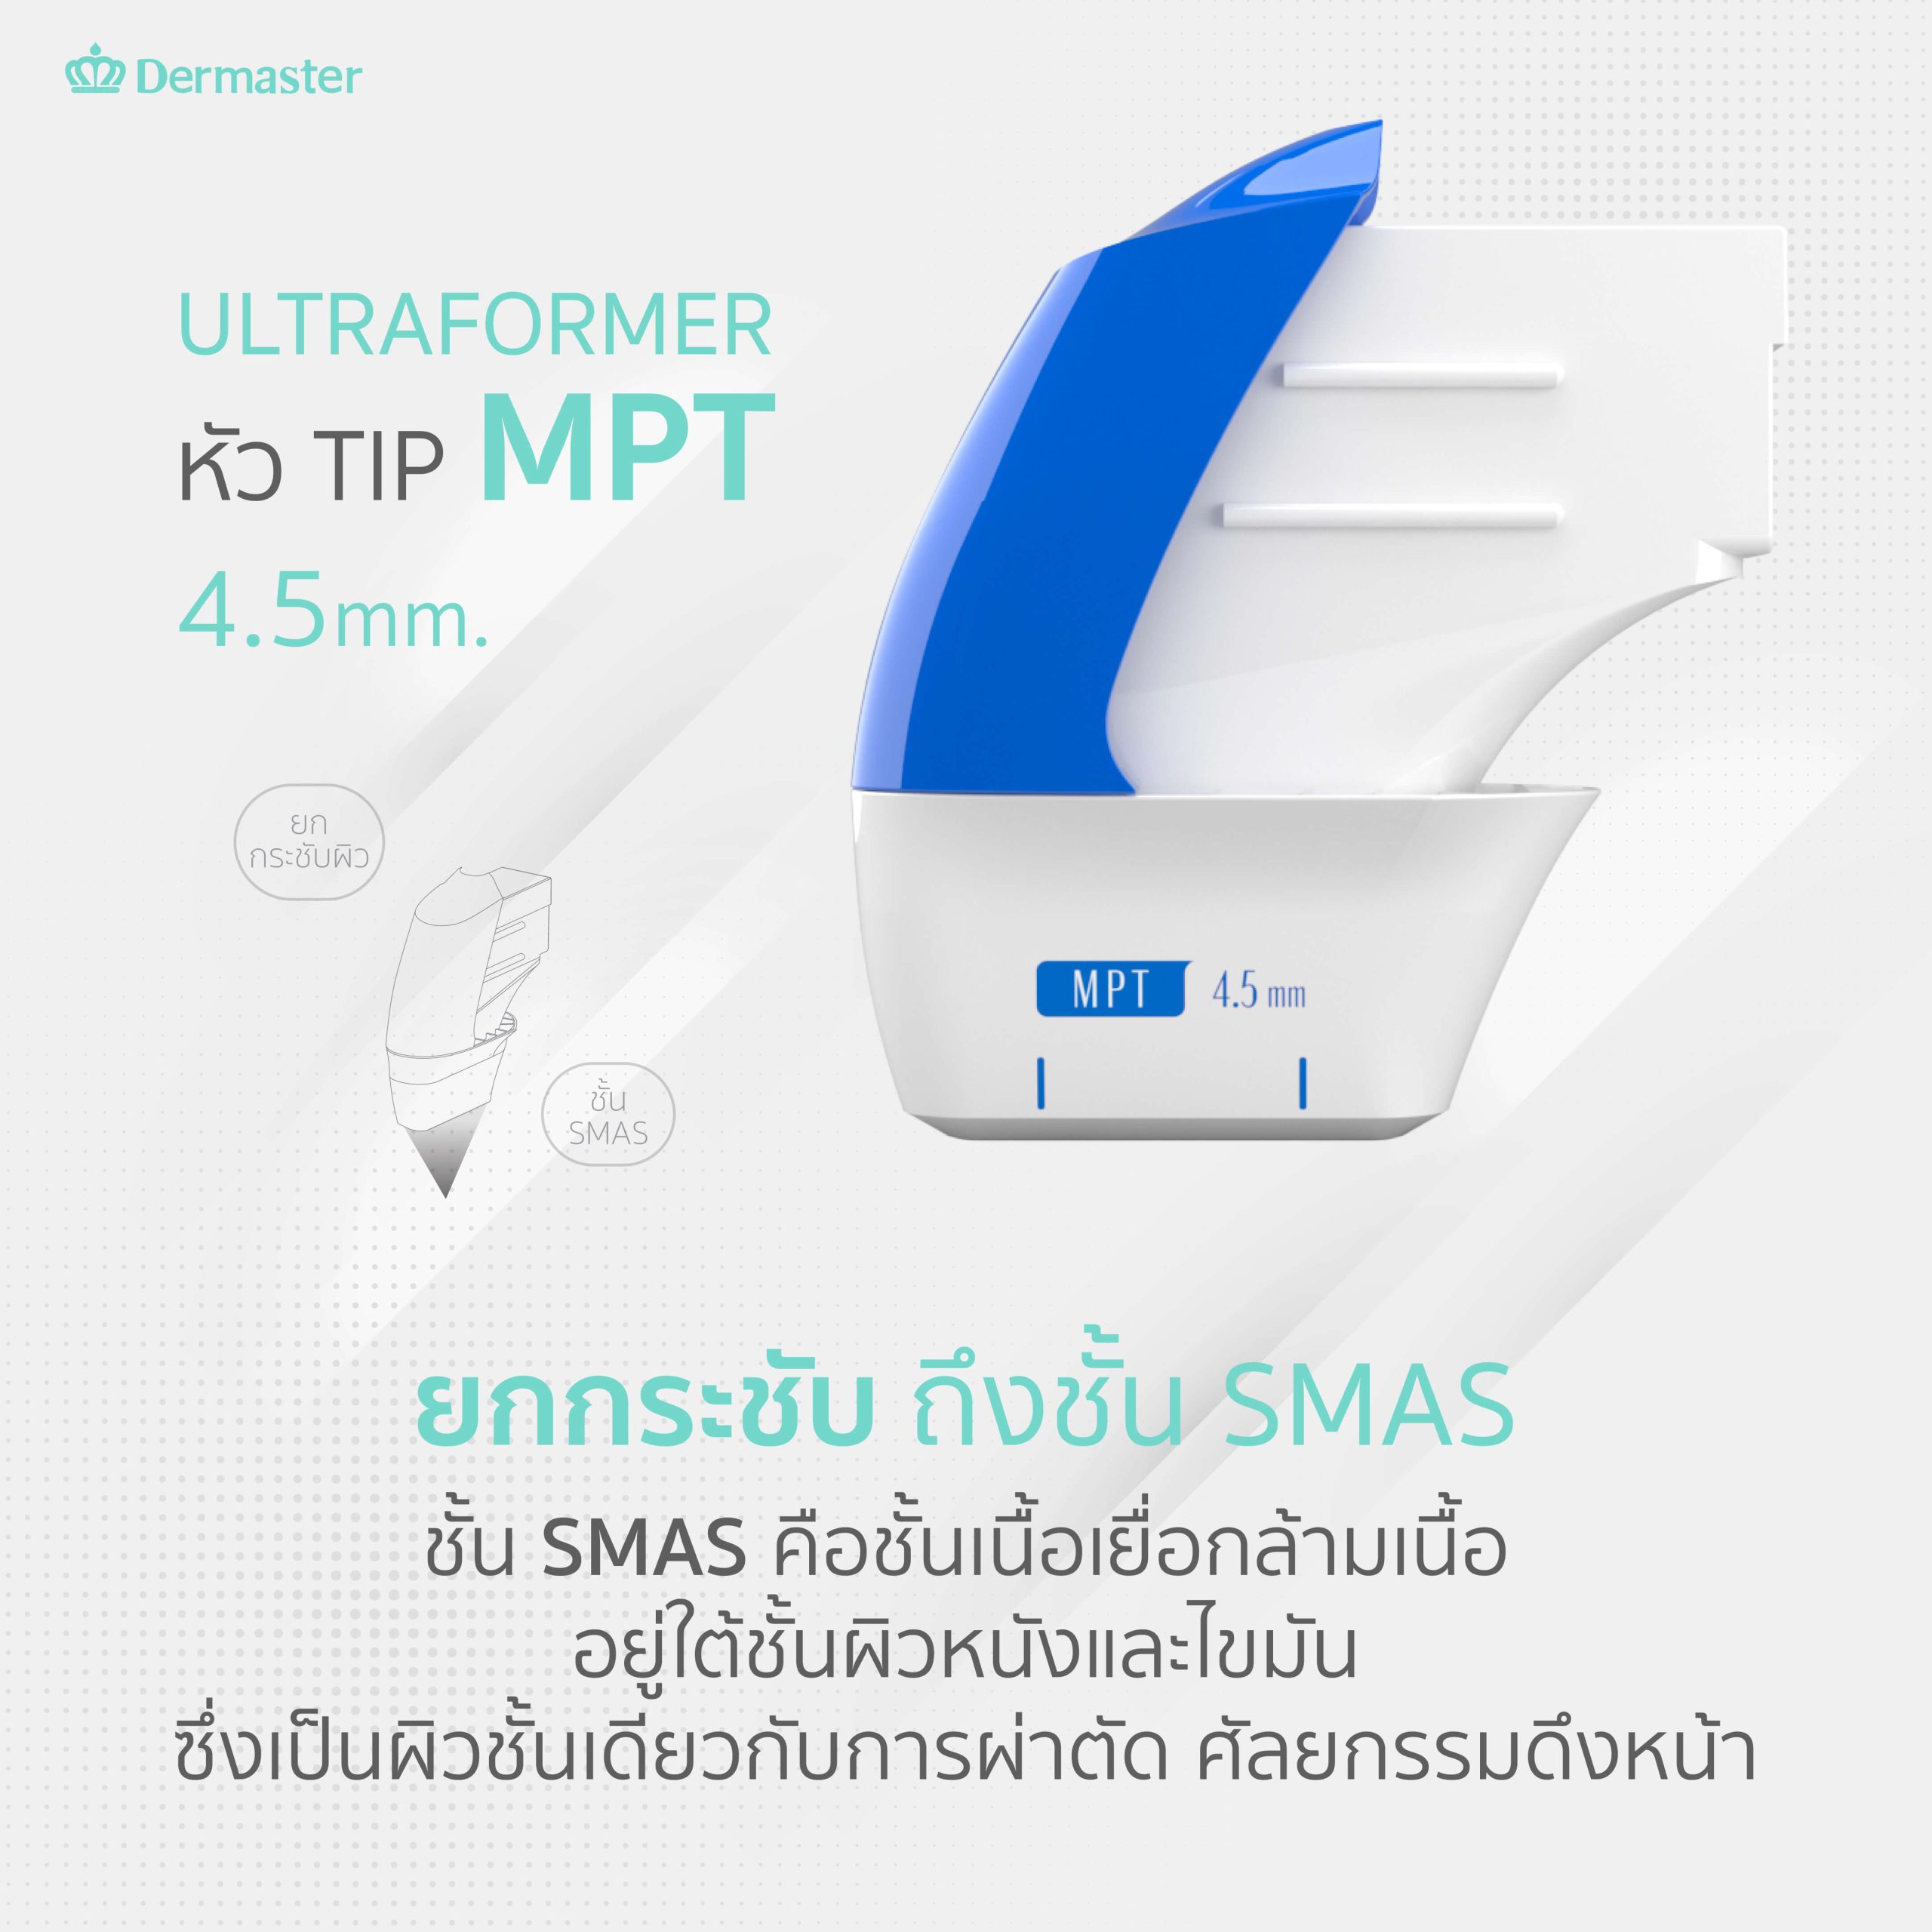 Dermaster Thailand เทคโนโลยีใหม่ล่าสุด Ultraformer MPT เฉพาะสาขาเอกมัยเท่านั้น 6